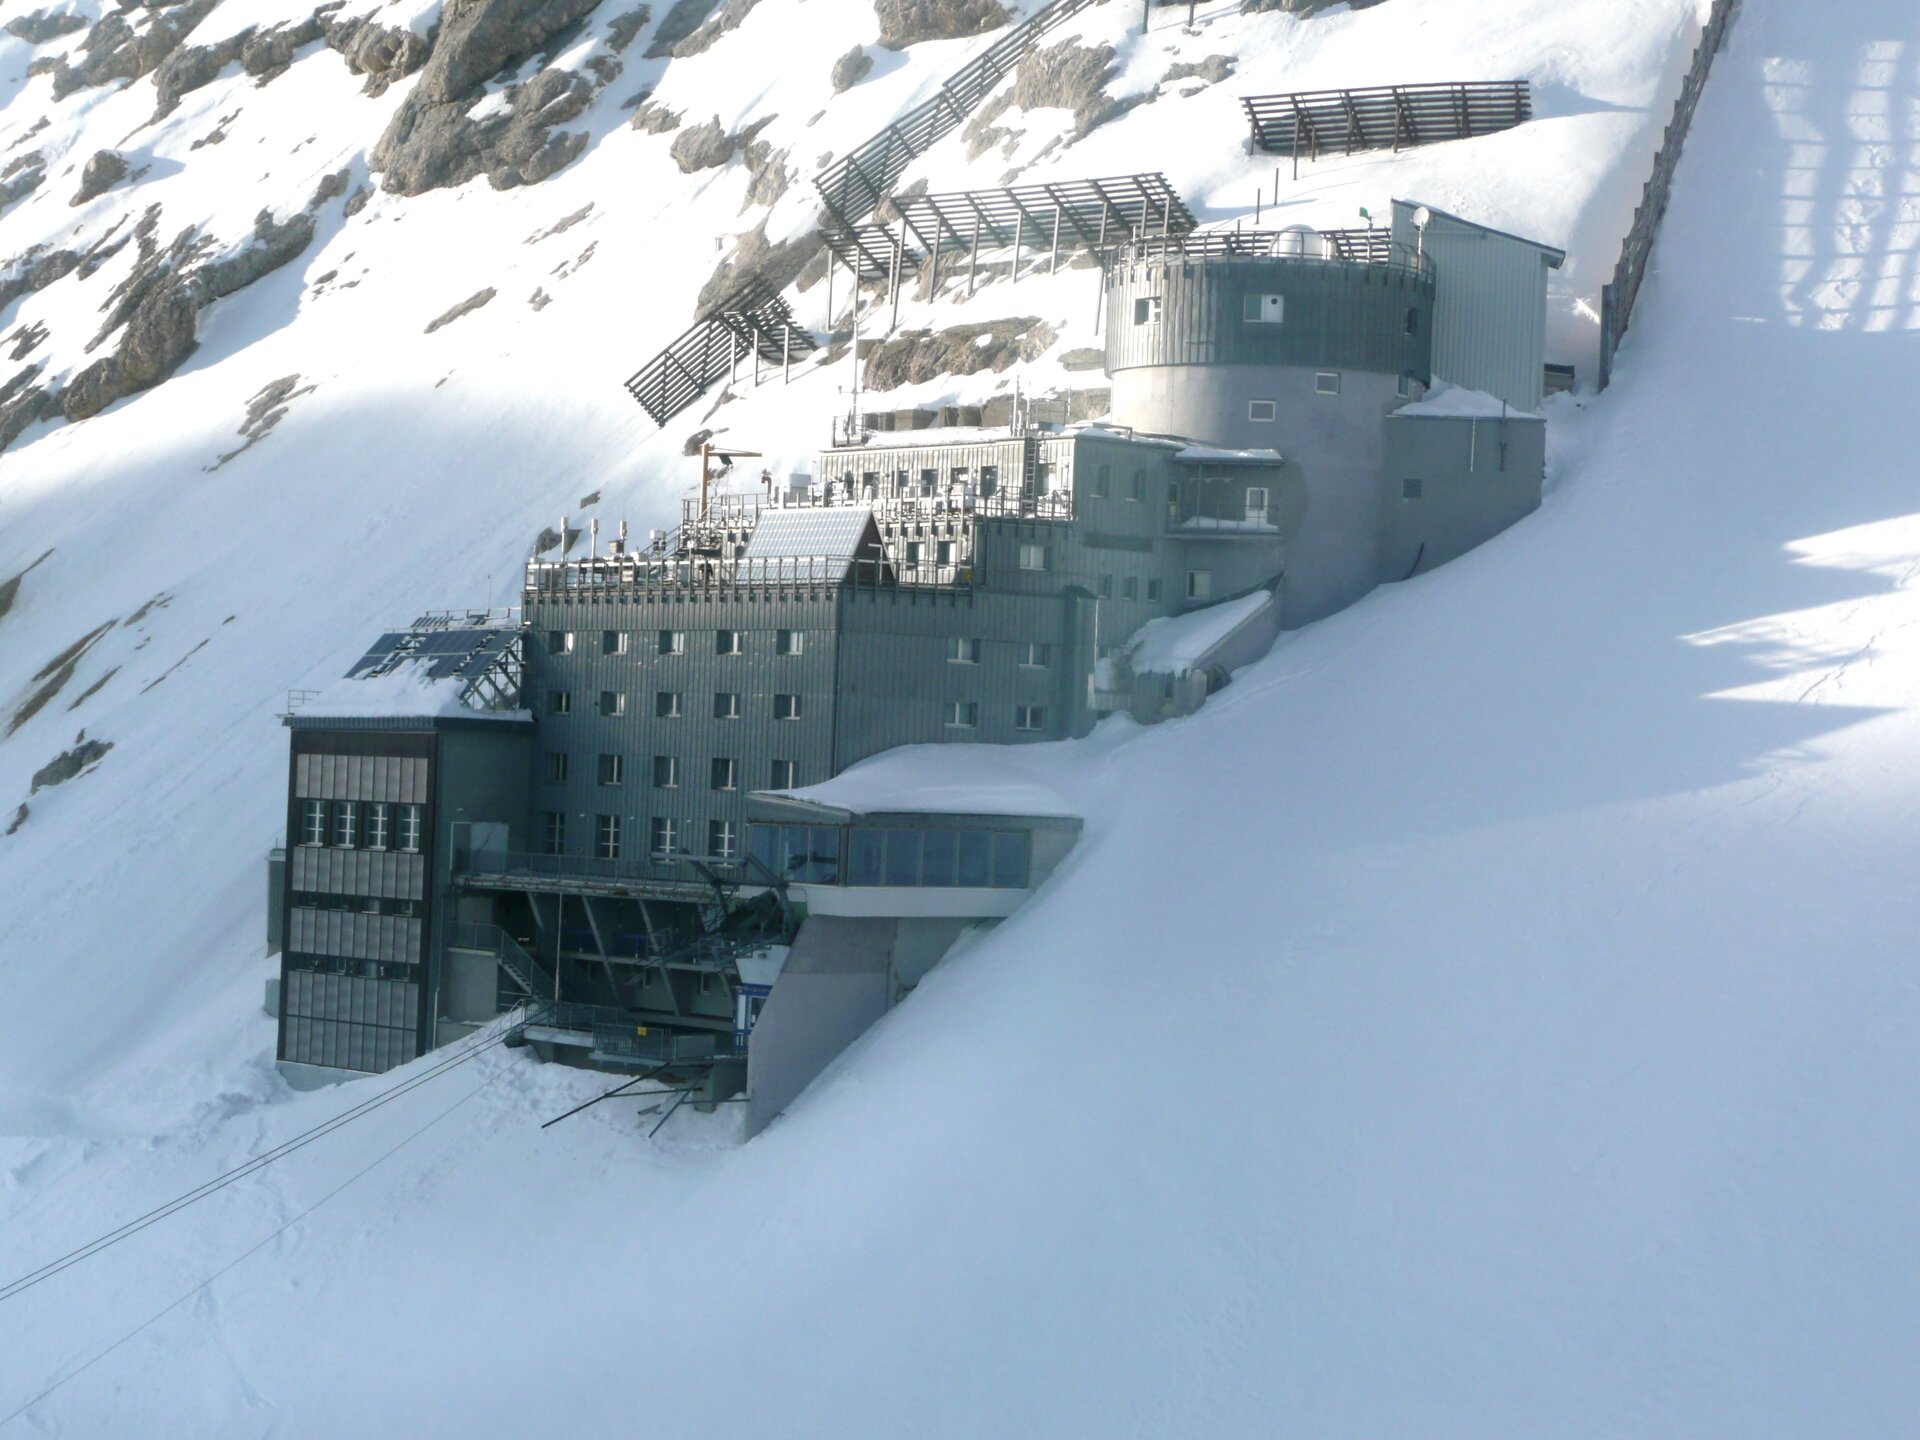 The Schneefernerhaus mountain observatory